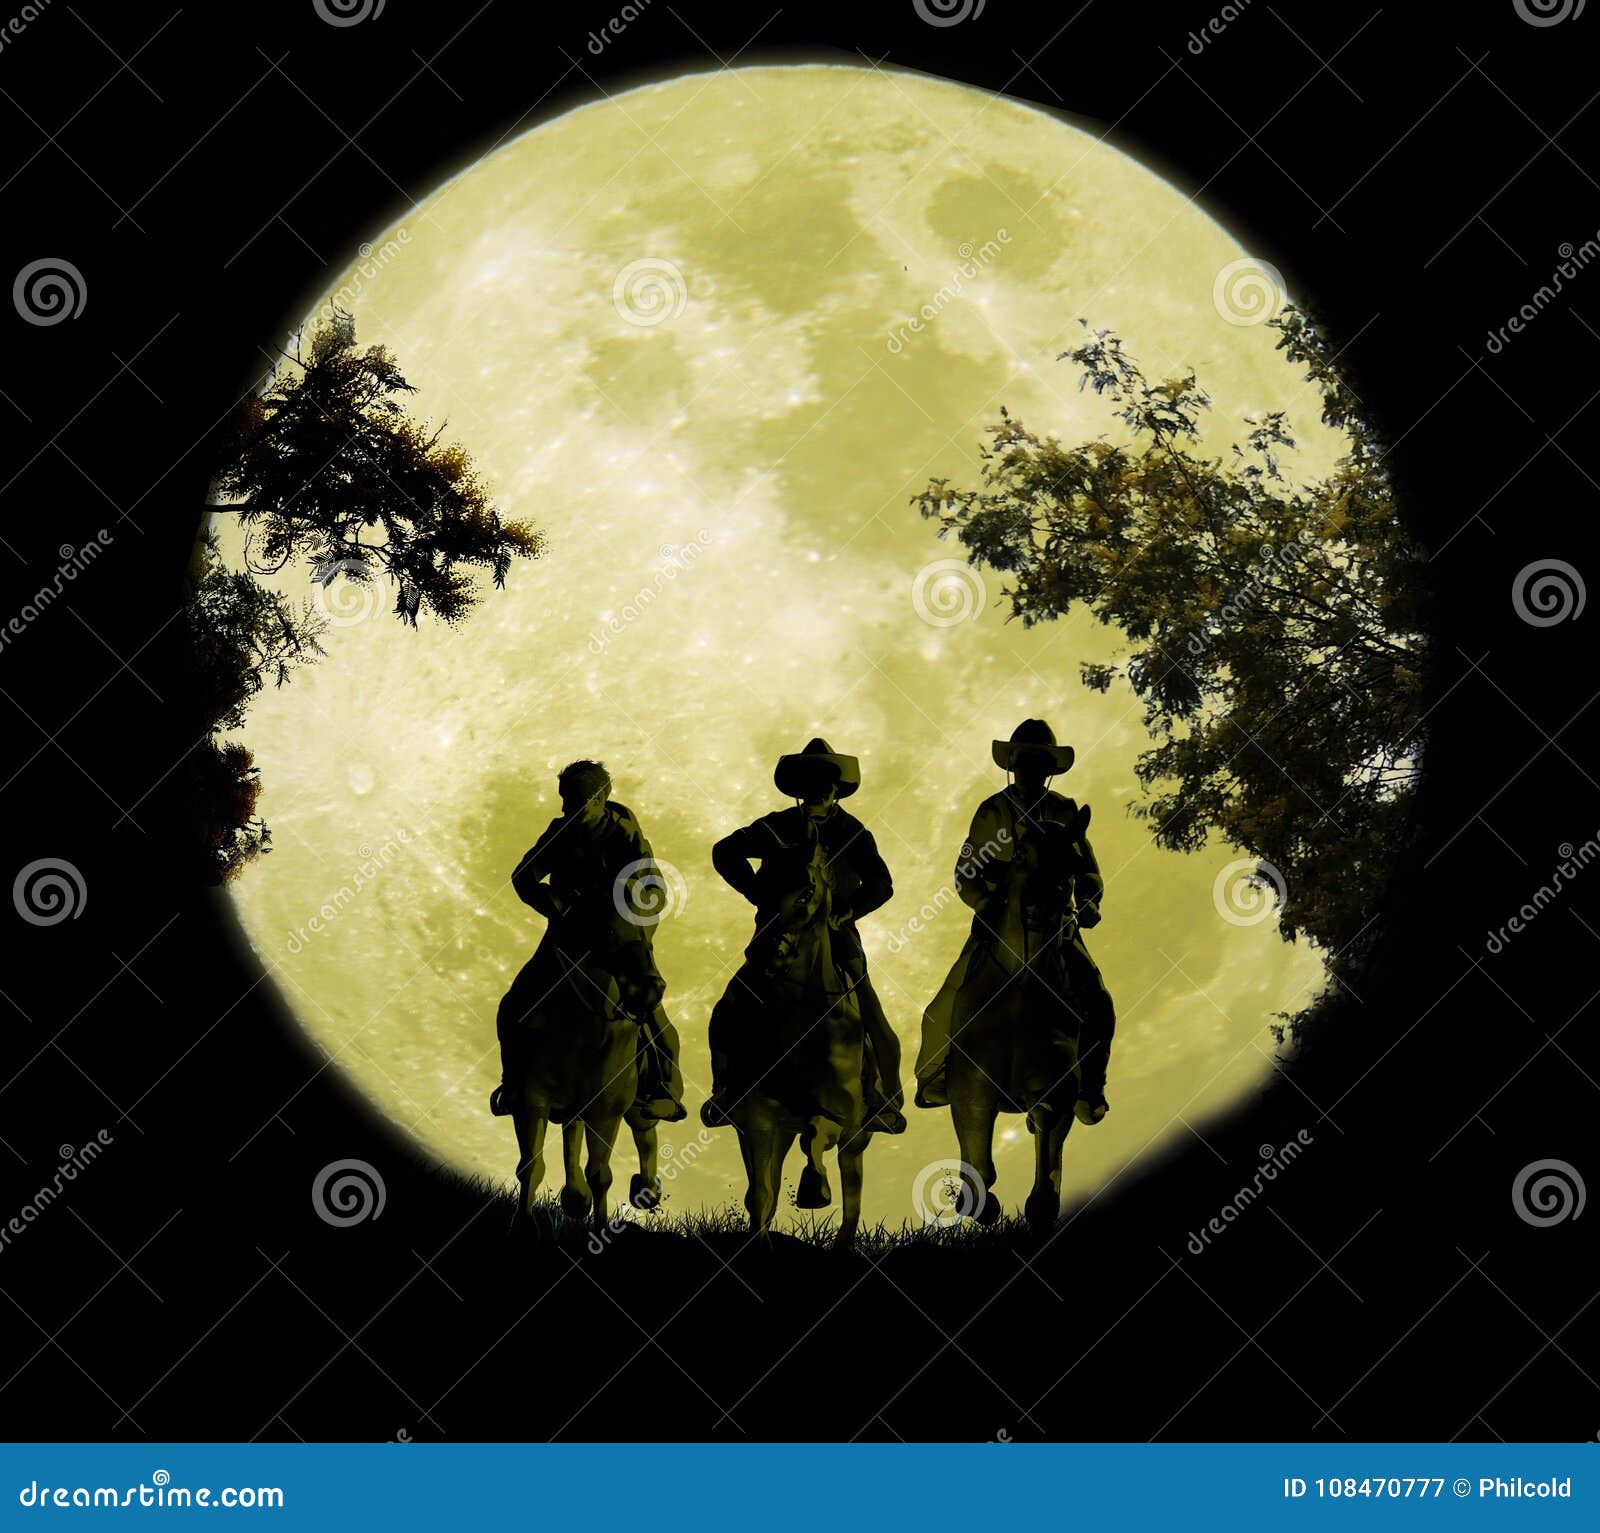 three cowboys under the moonrise